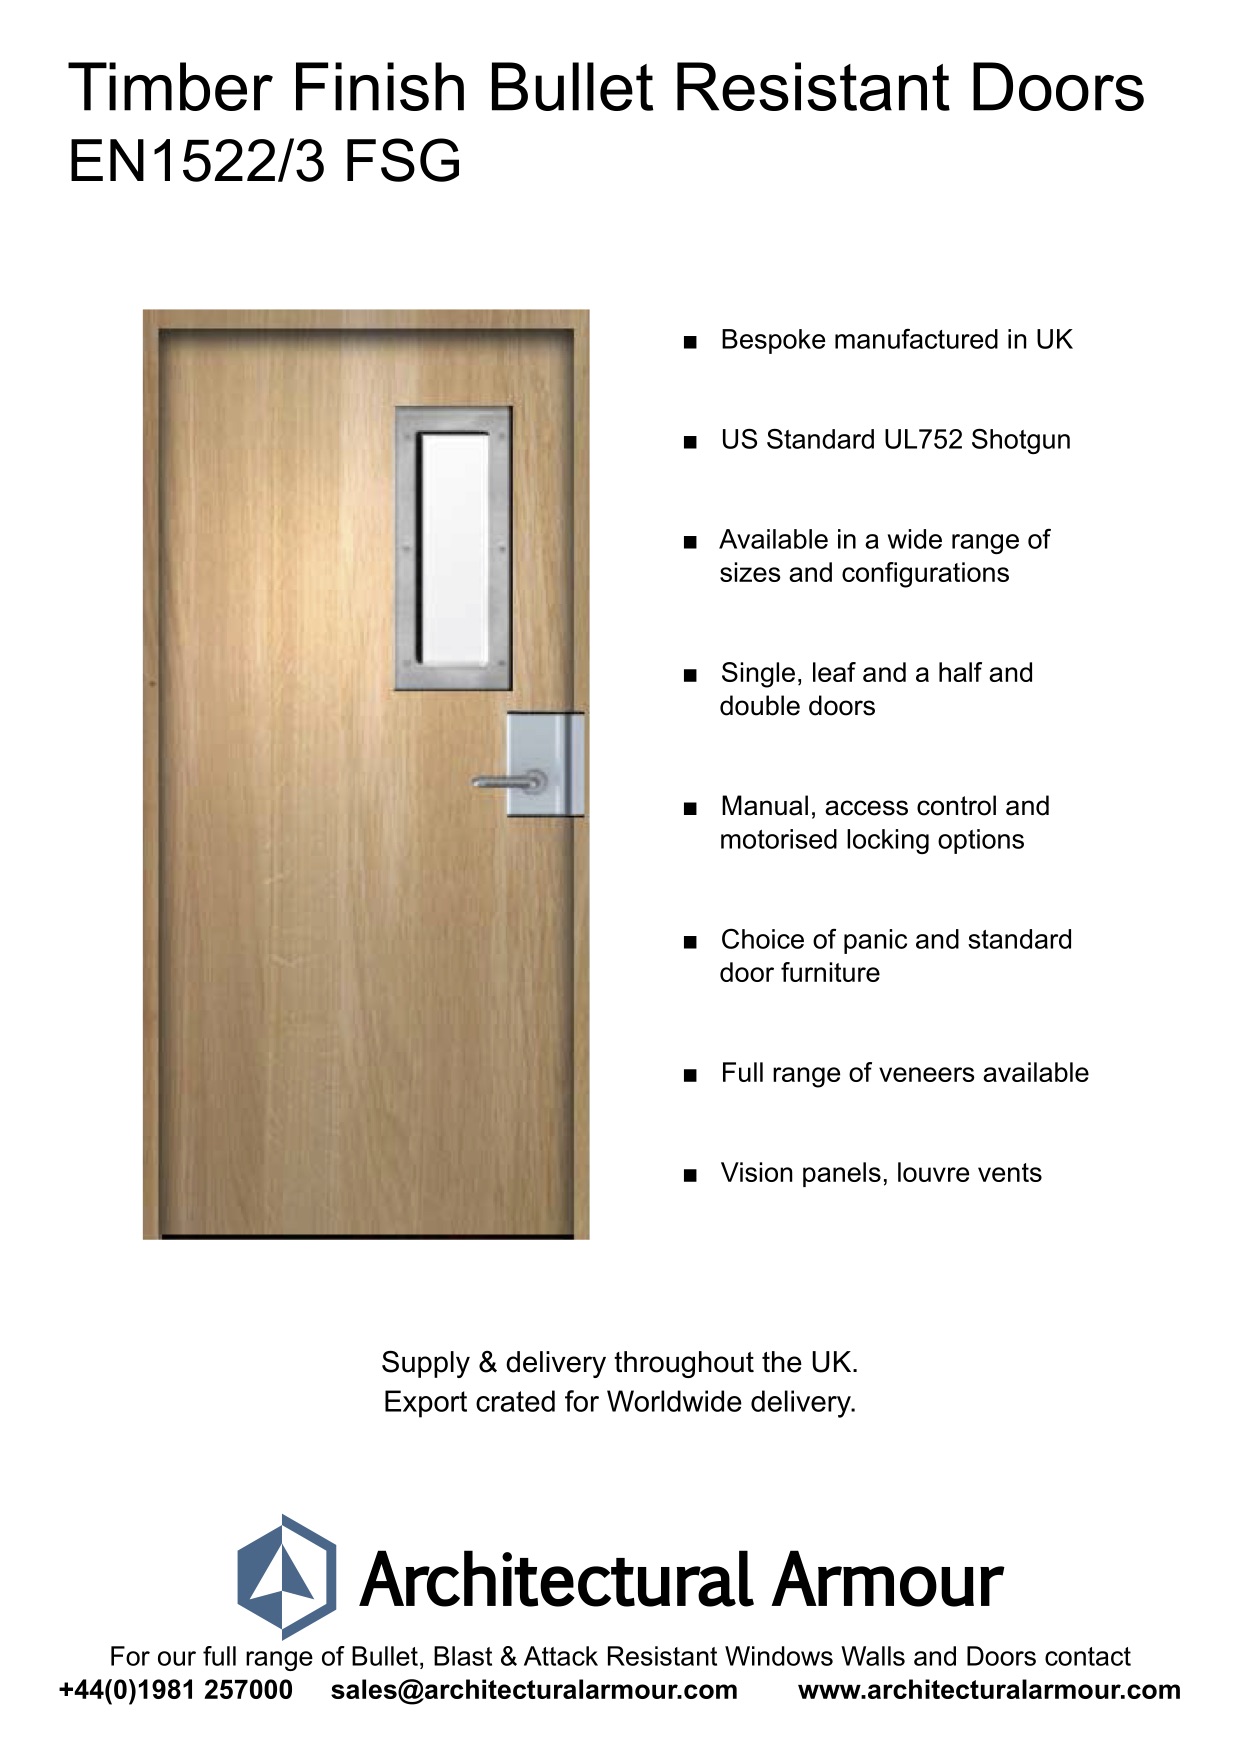 EN1522-3-FSG-Single-Slim-Vision-Panel-Bullet-Resistant-Timber-Finish-Door